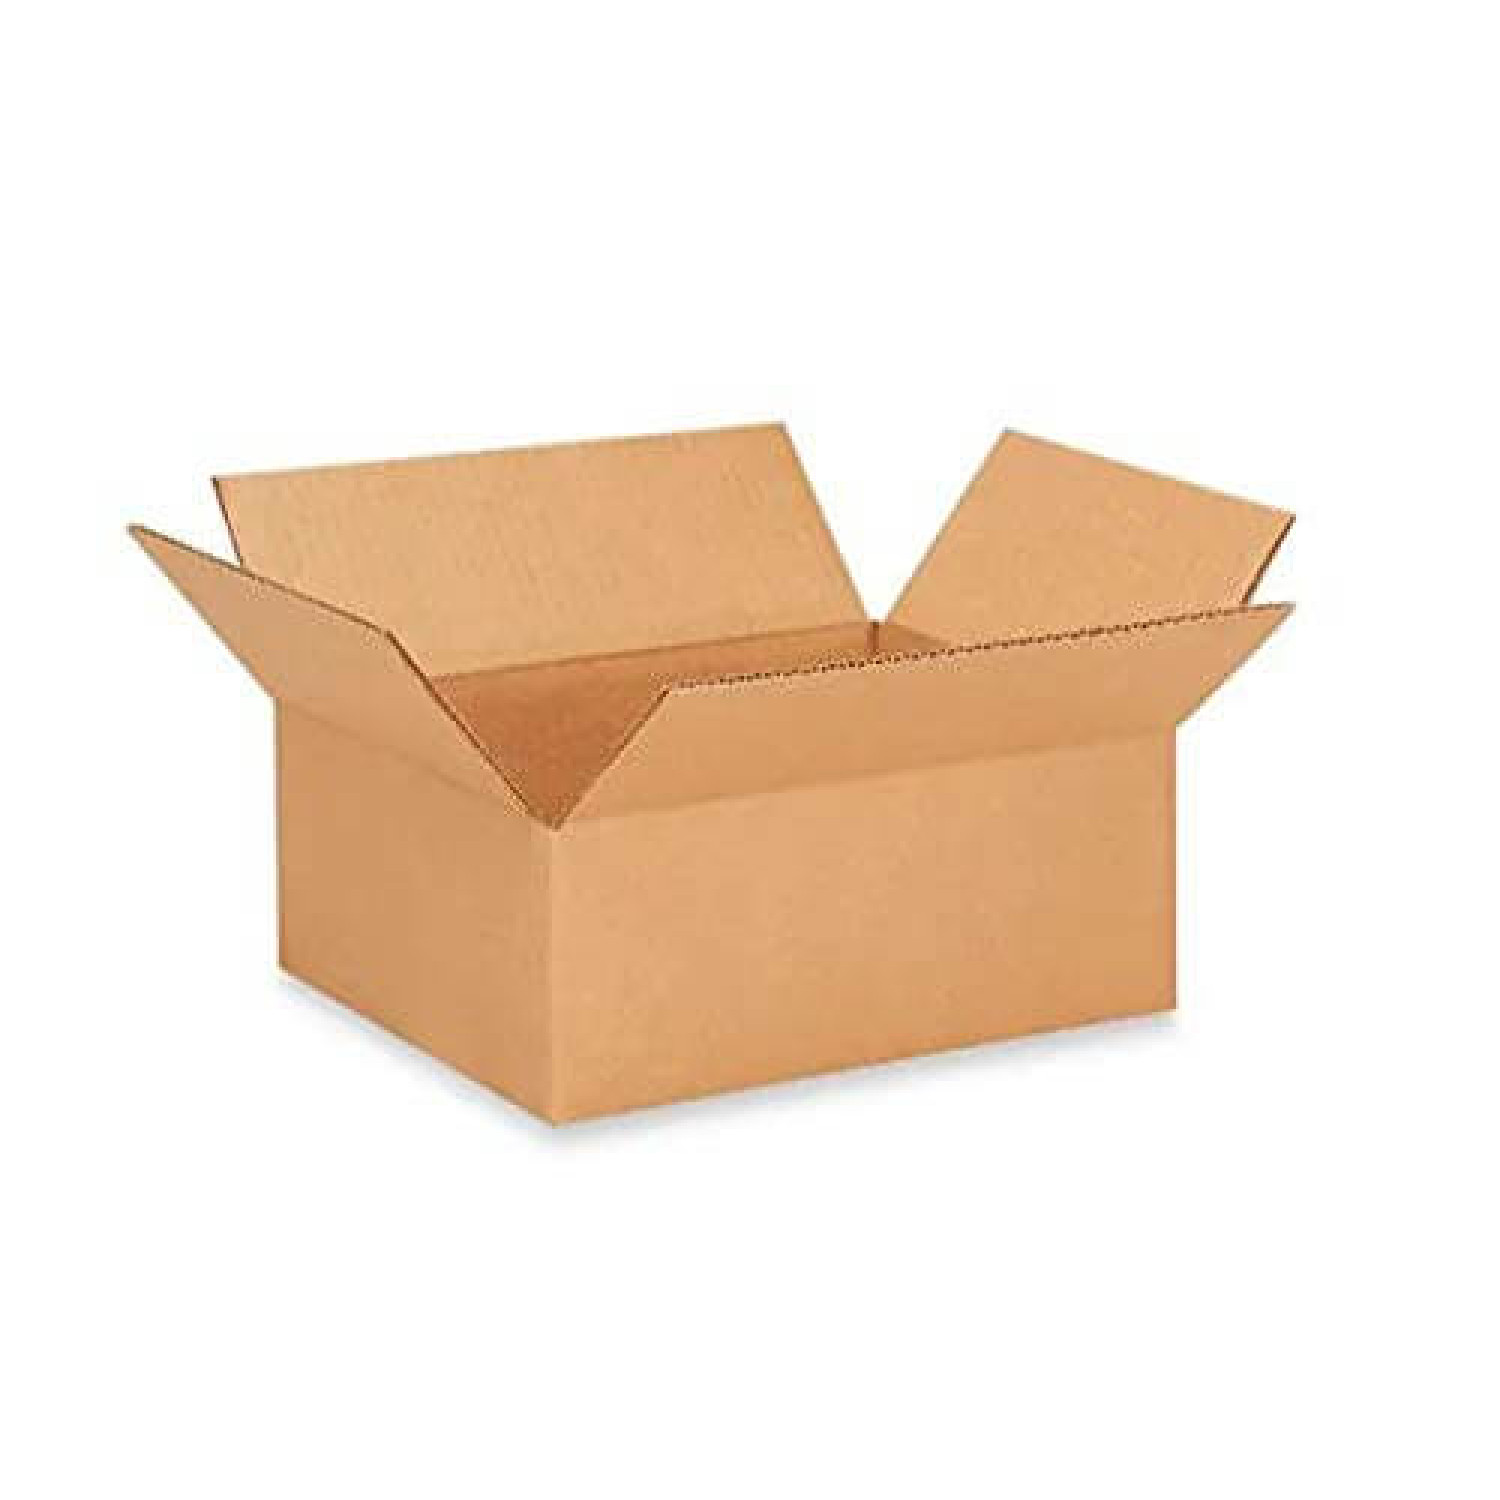 https://idlpack.com/image/cache/catalog/Products/Boxes/11-14L-8-34W-4H-Letterhead-Cardboard-Box-1500x1500.jpg